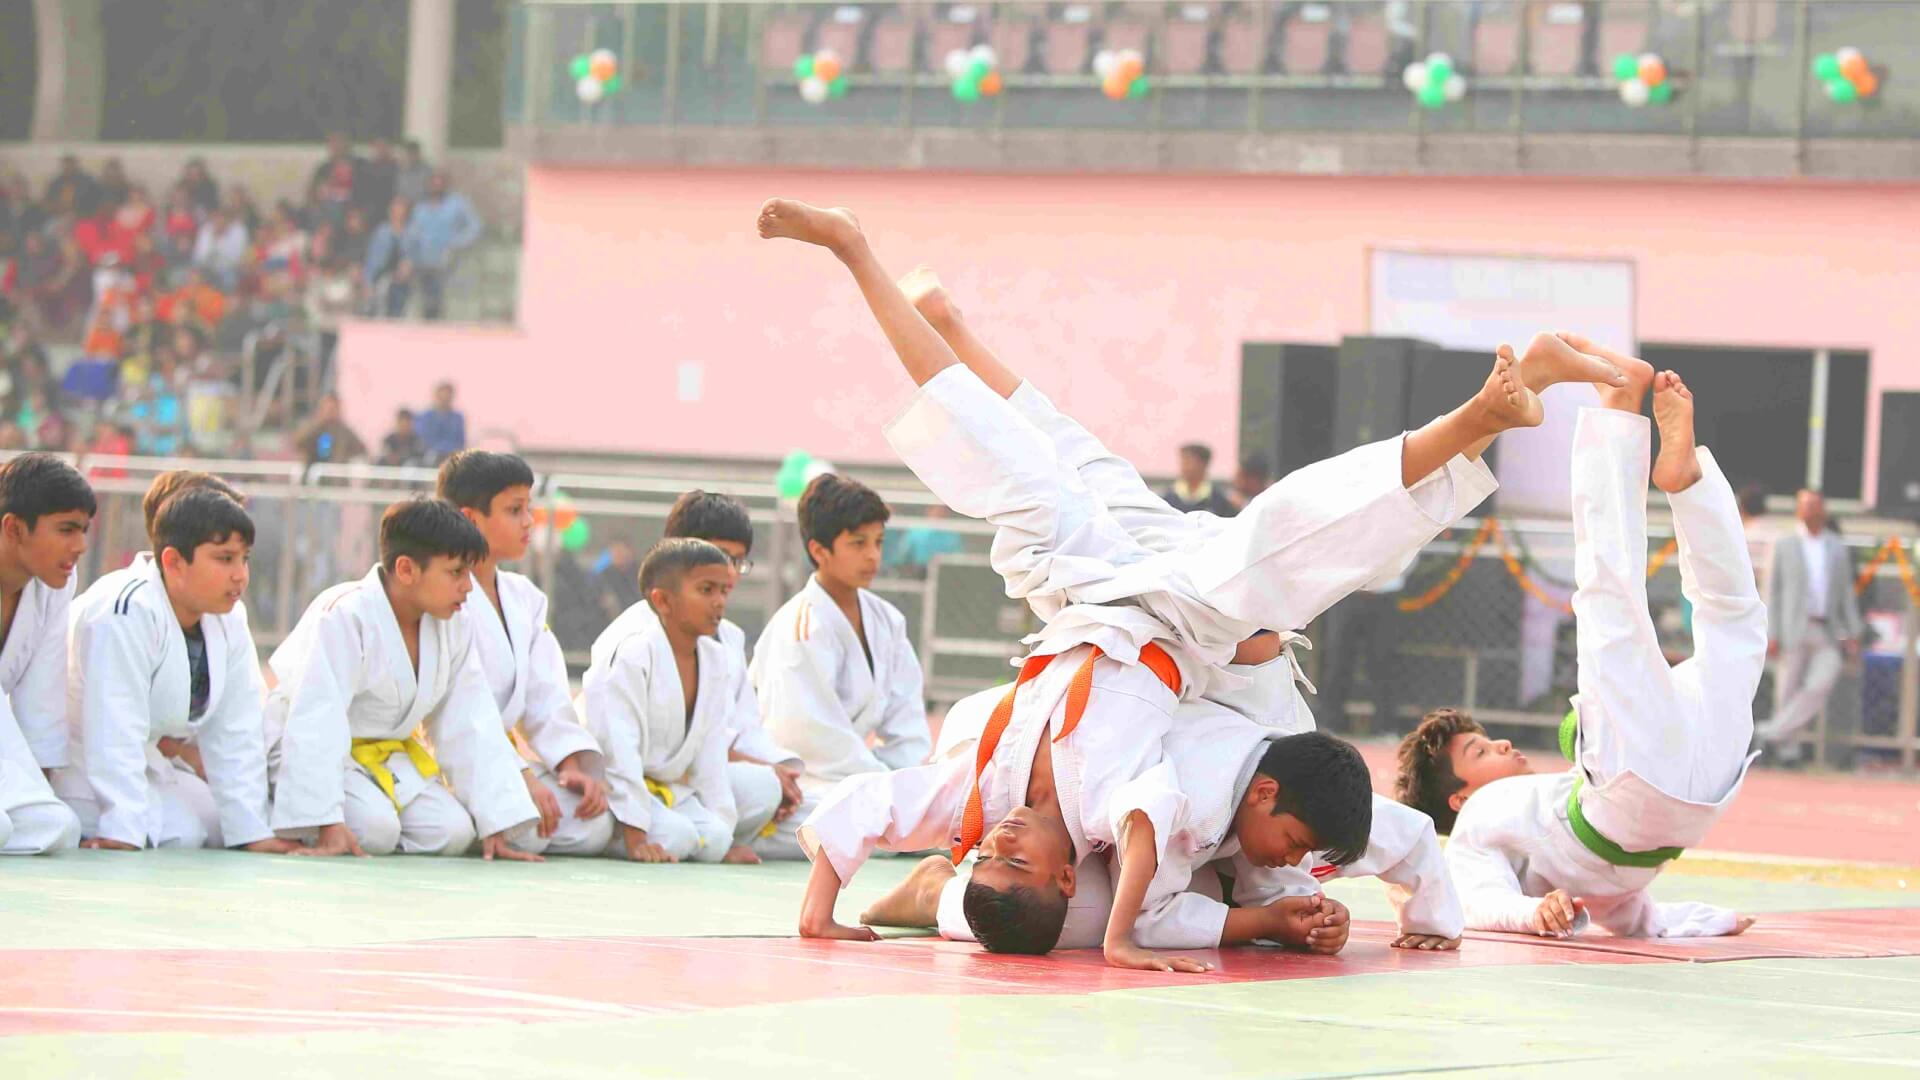 Group Karate Performance at Richmondd Global School Delhi